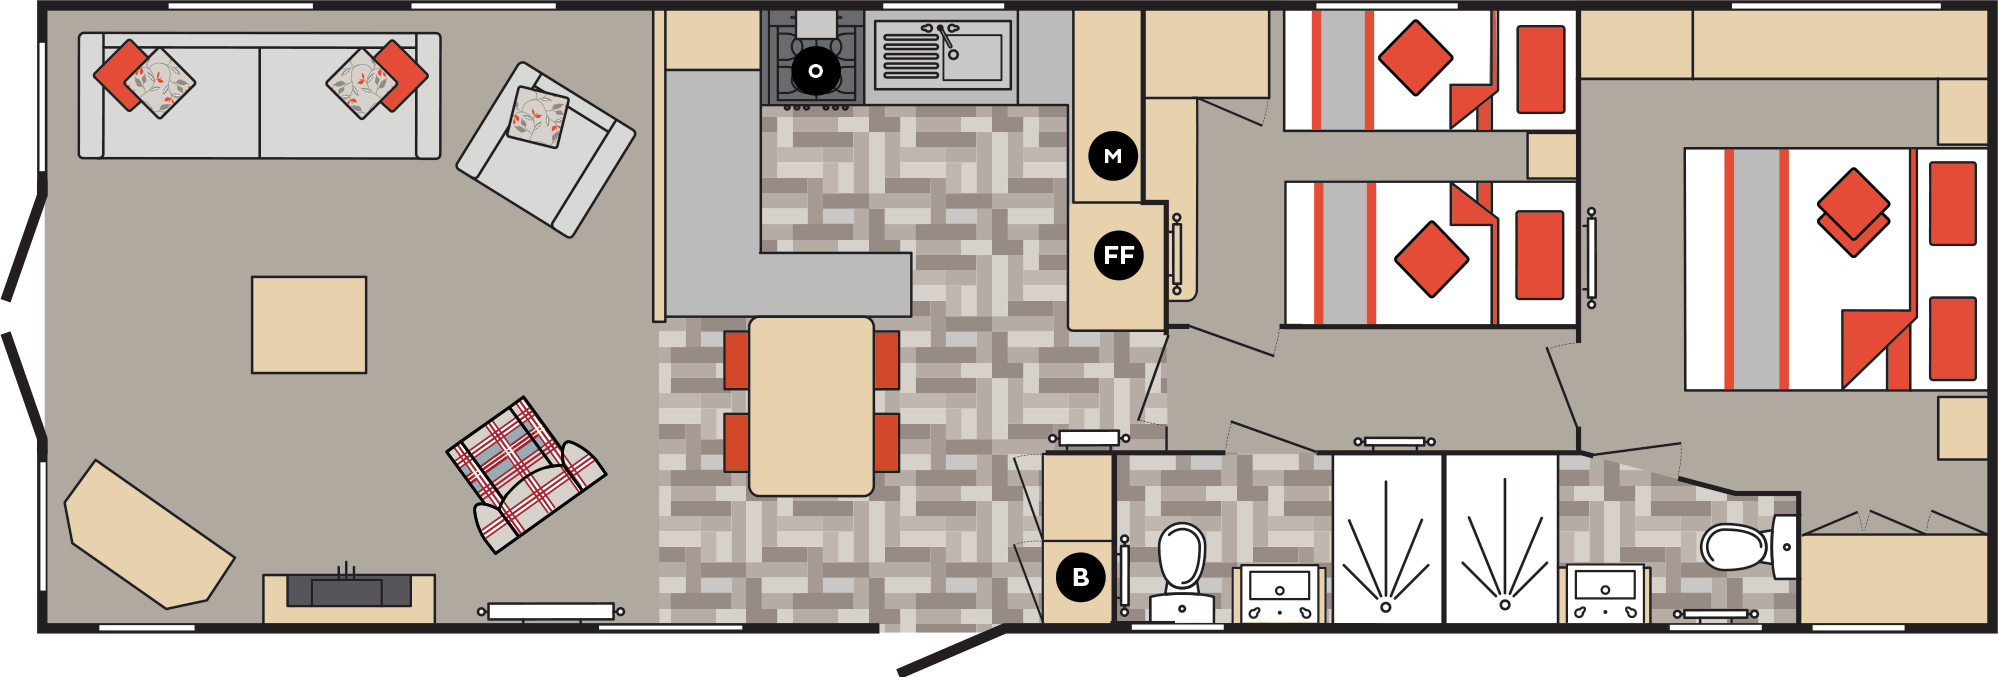 New Carnaby Glenmoor Lodge 40x13 floorplan layout static caravan mobile home